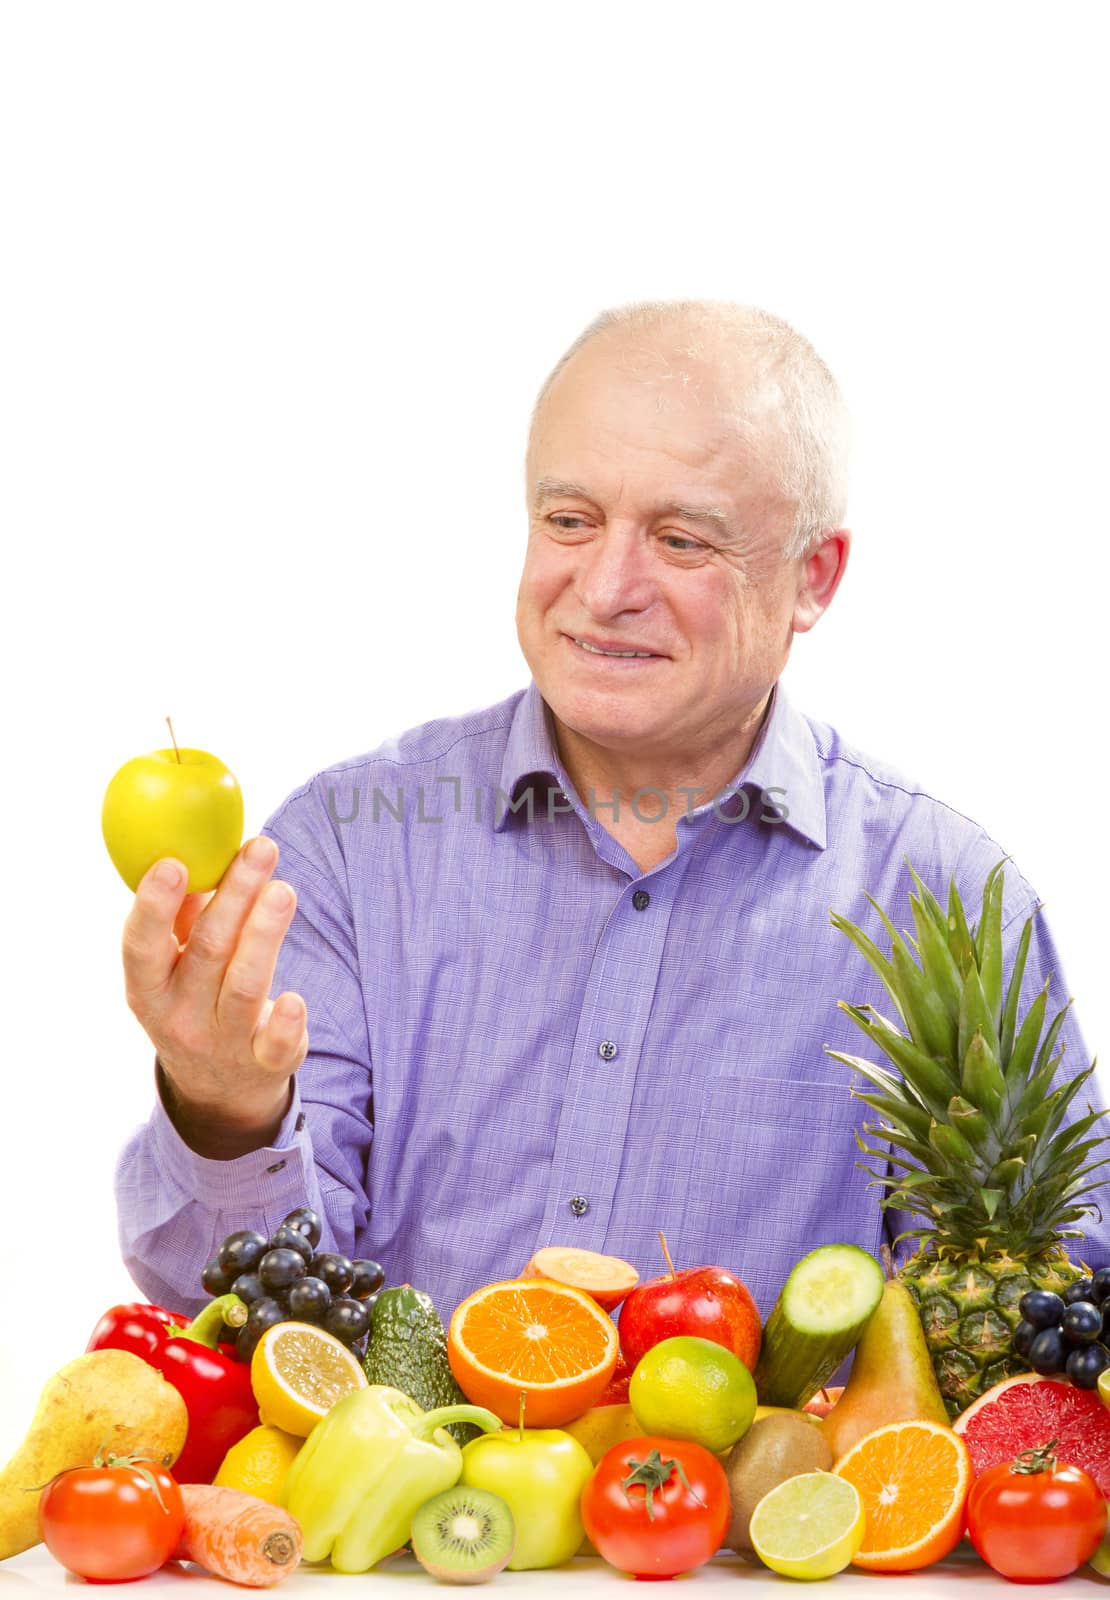 Closeup of senior man holding a green apple